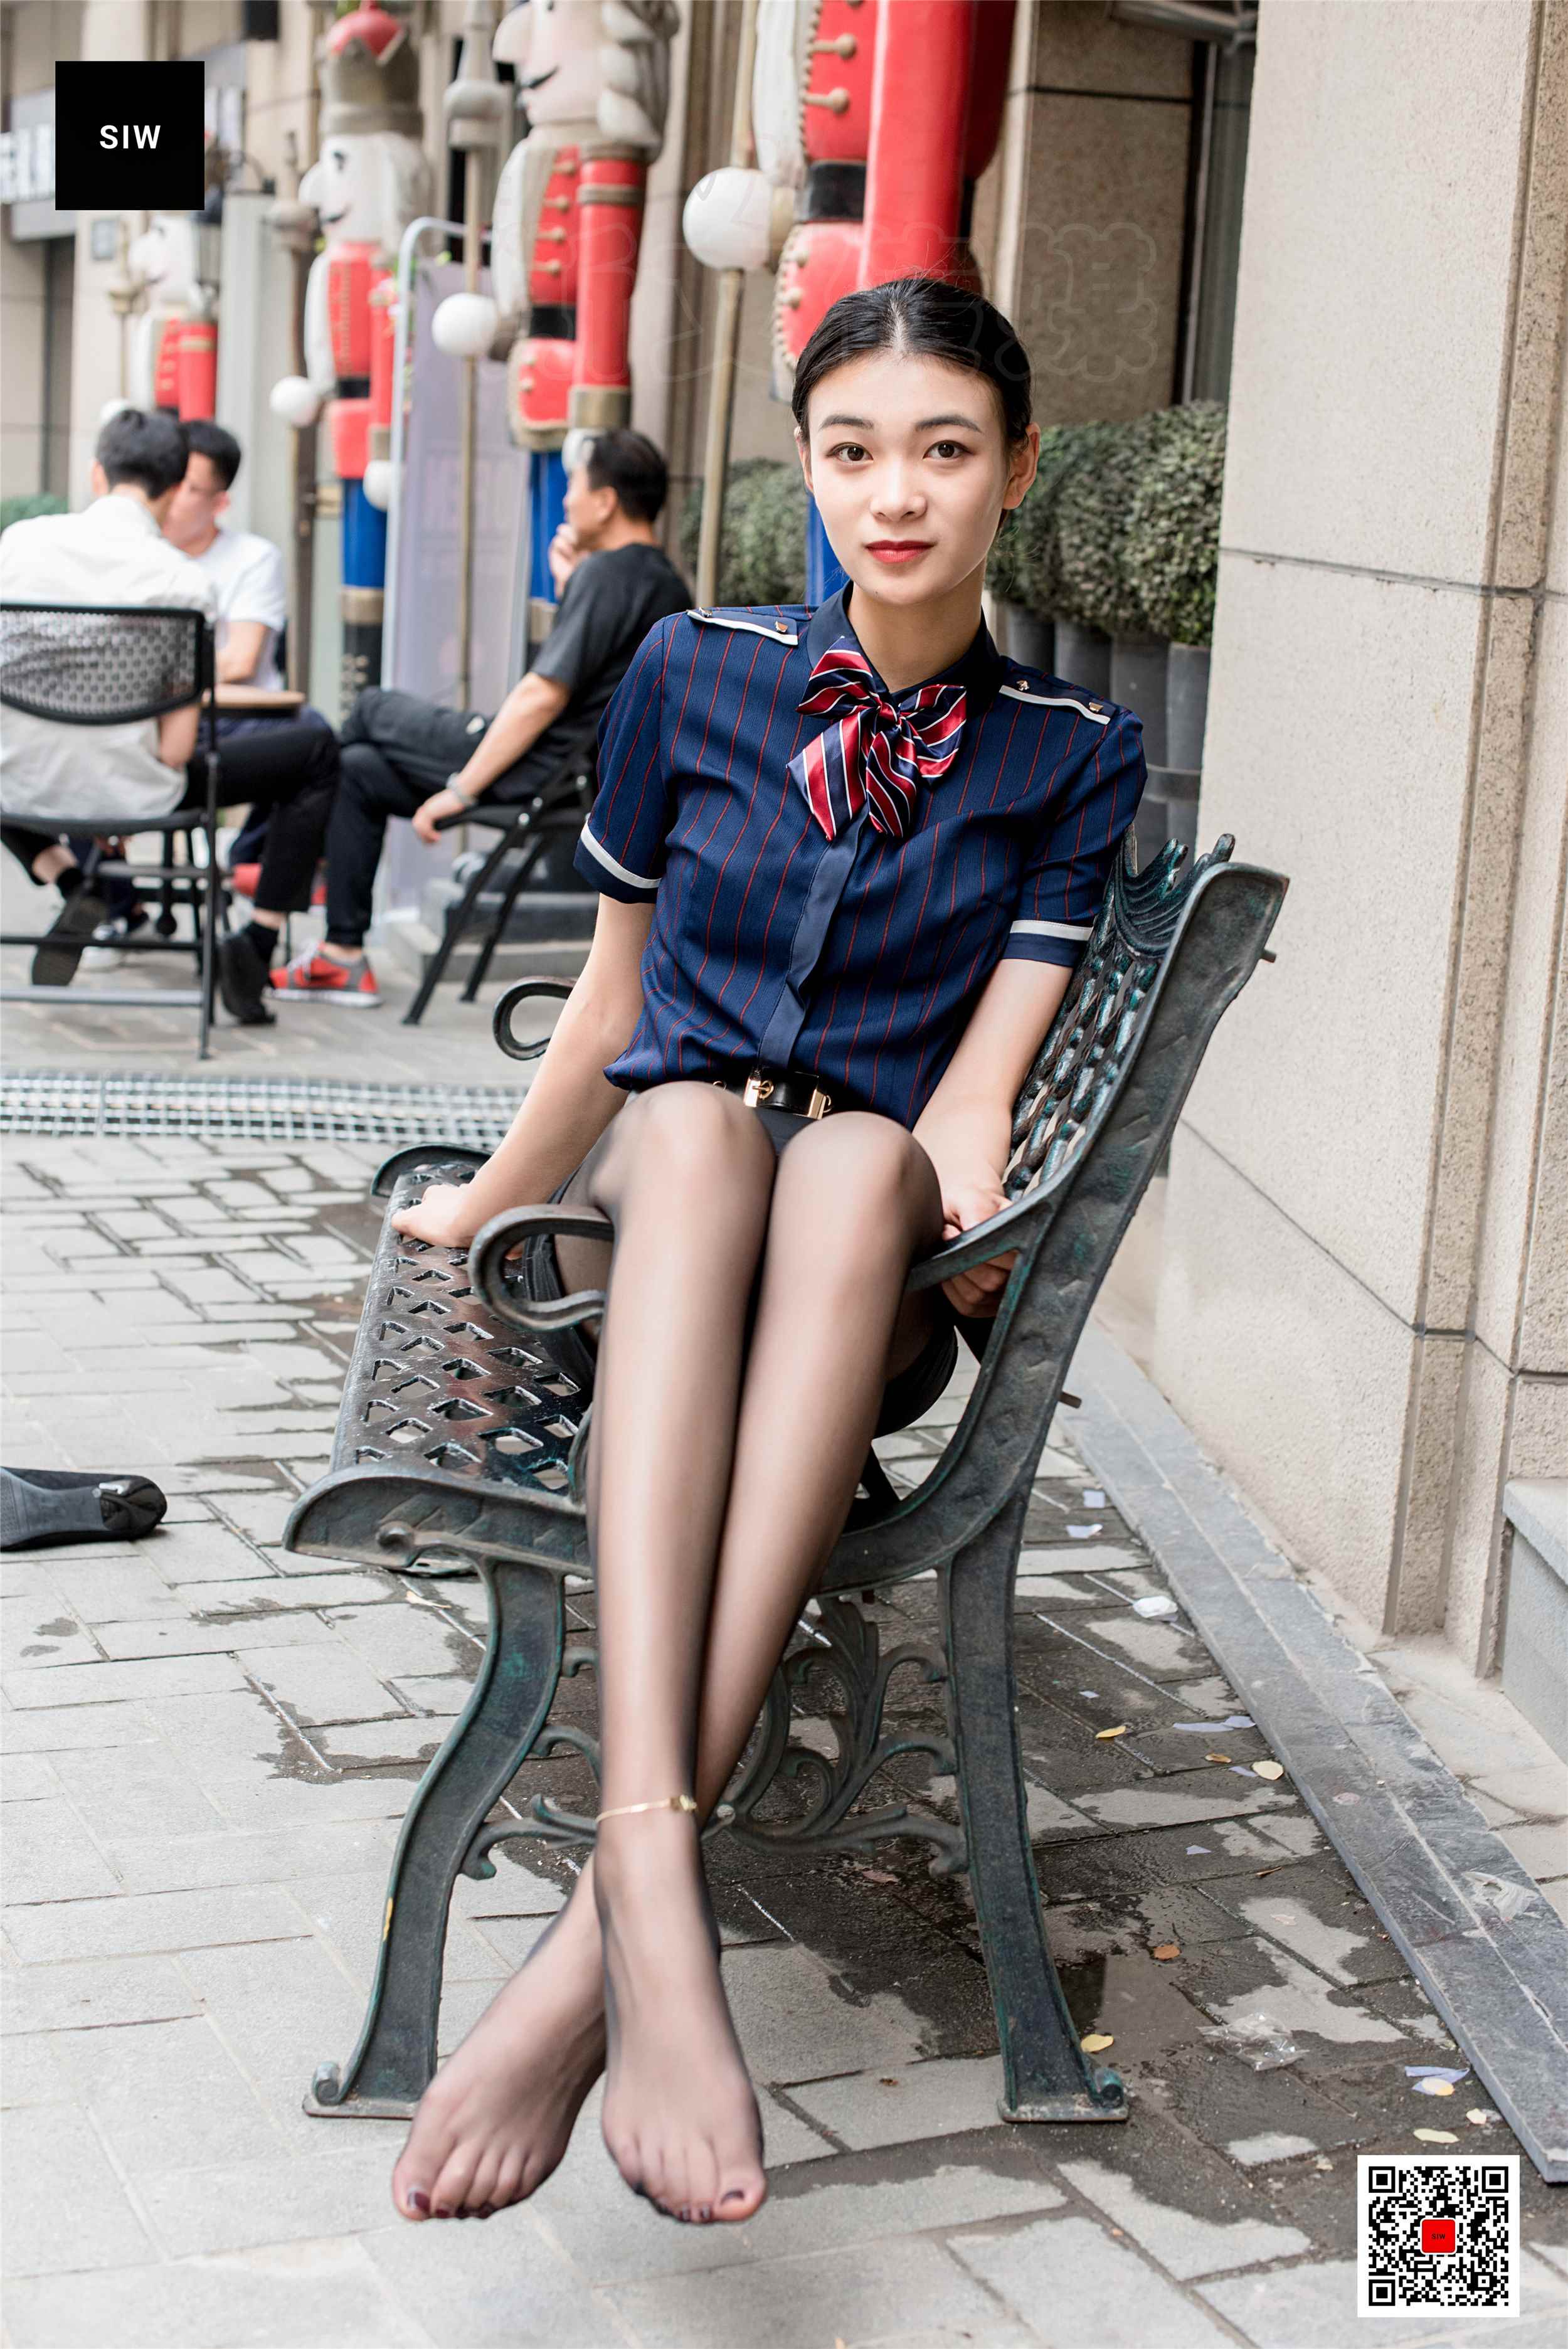 China Beauty Legs and feet 47